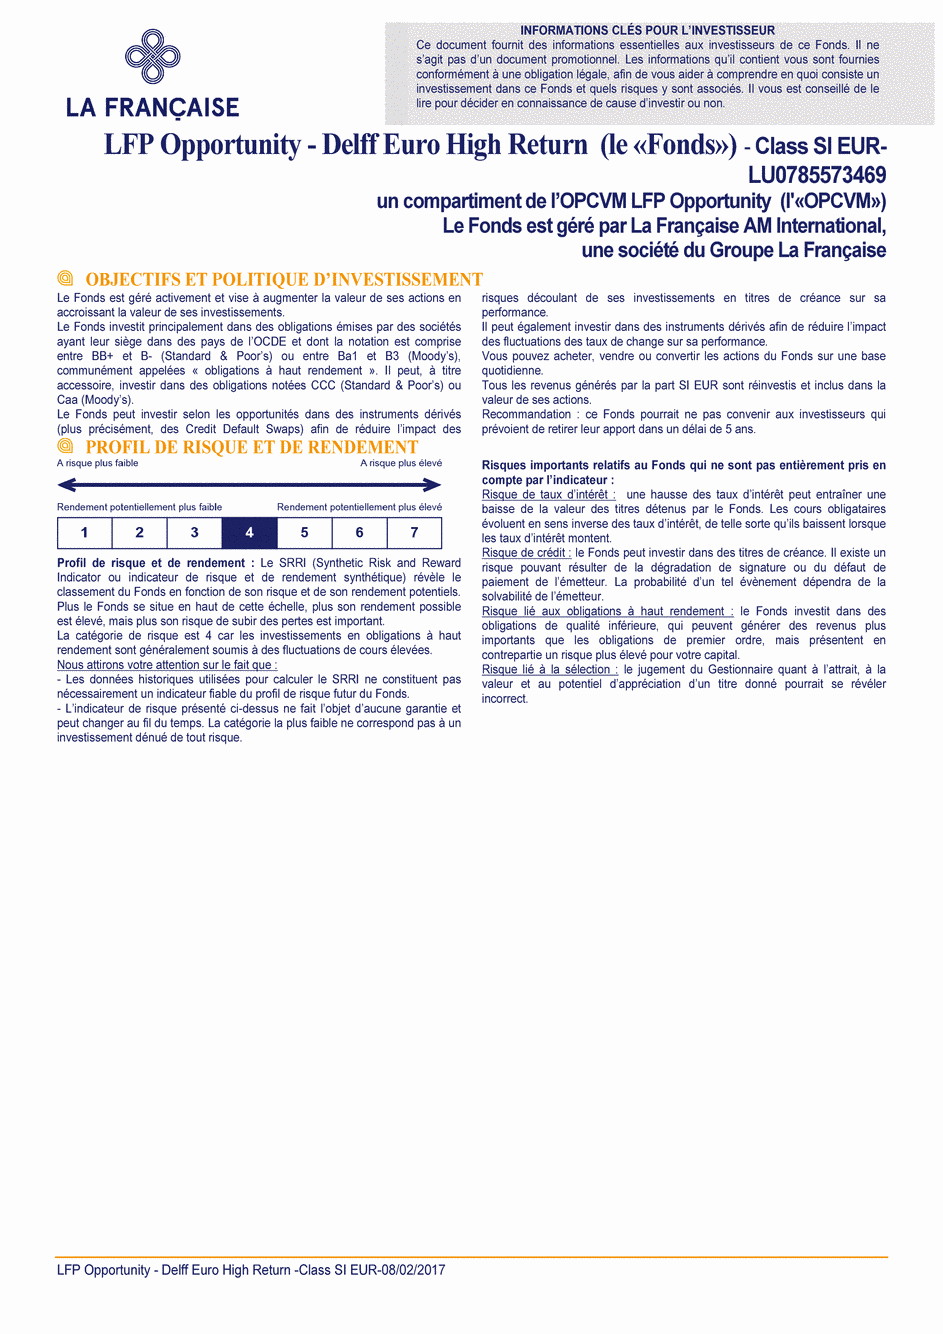 DICI LFP Opportunity - Delff Euro High Return (Class SI) - 08/02/2017 - Français